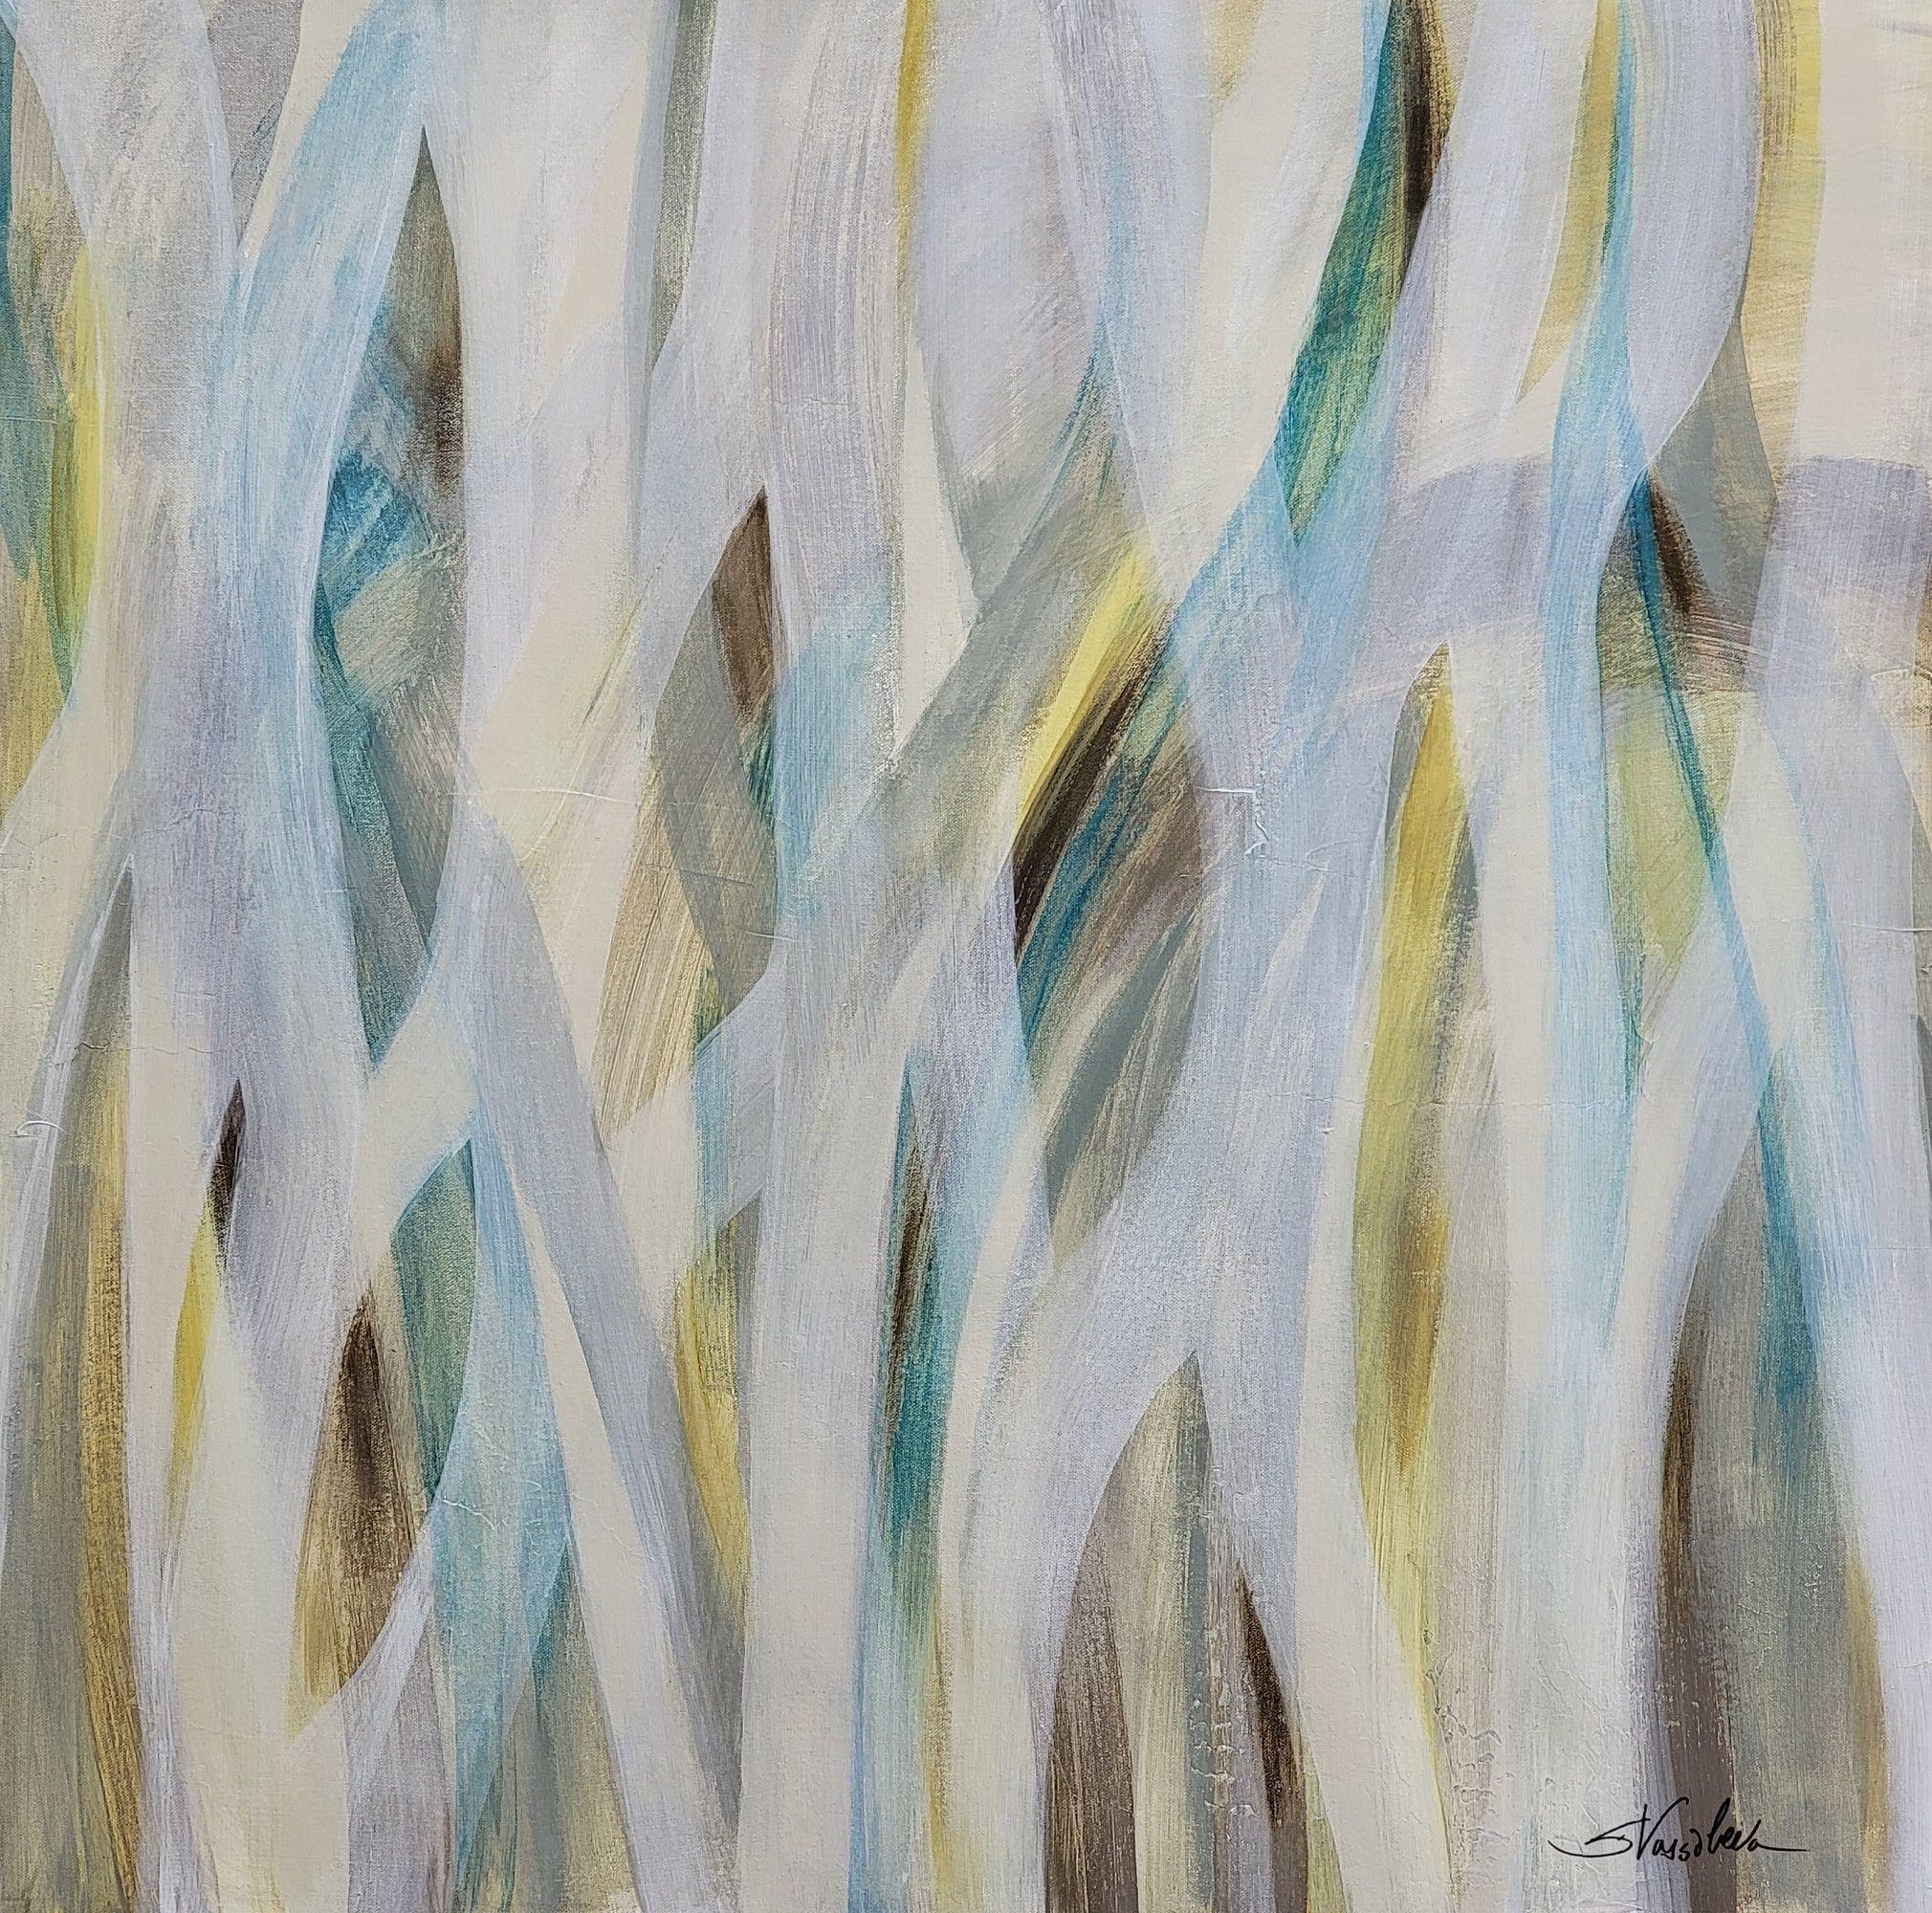 silvia vassileva Abstract Painting - Grassy Meadows, Painting, Acrylic on Canvas